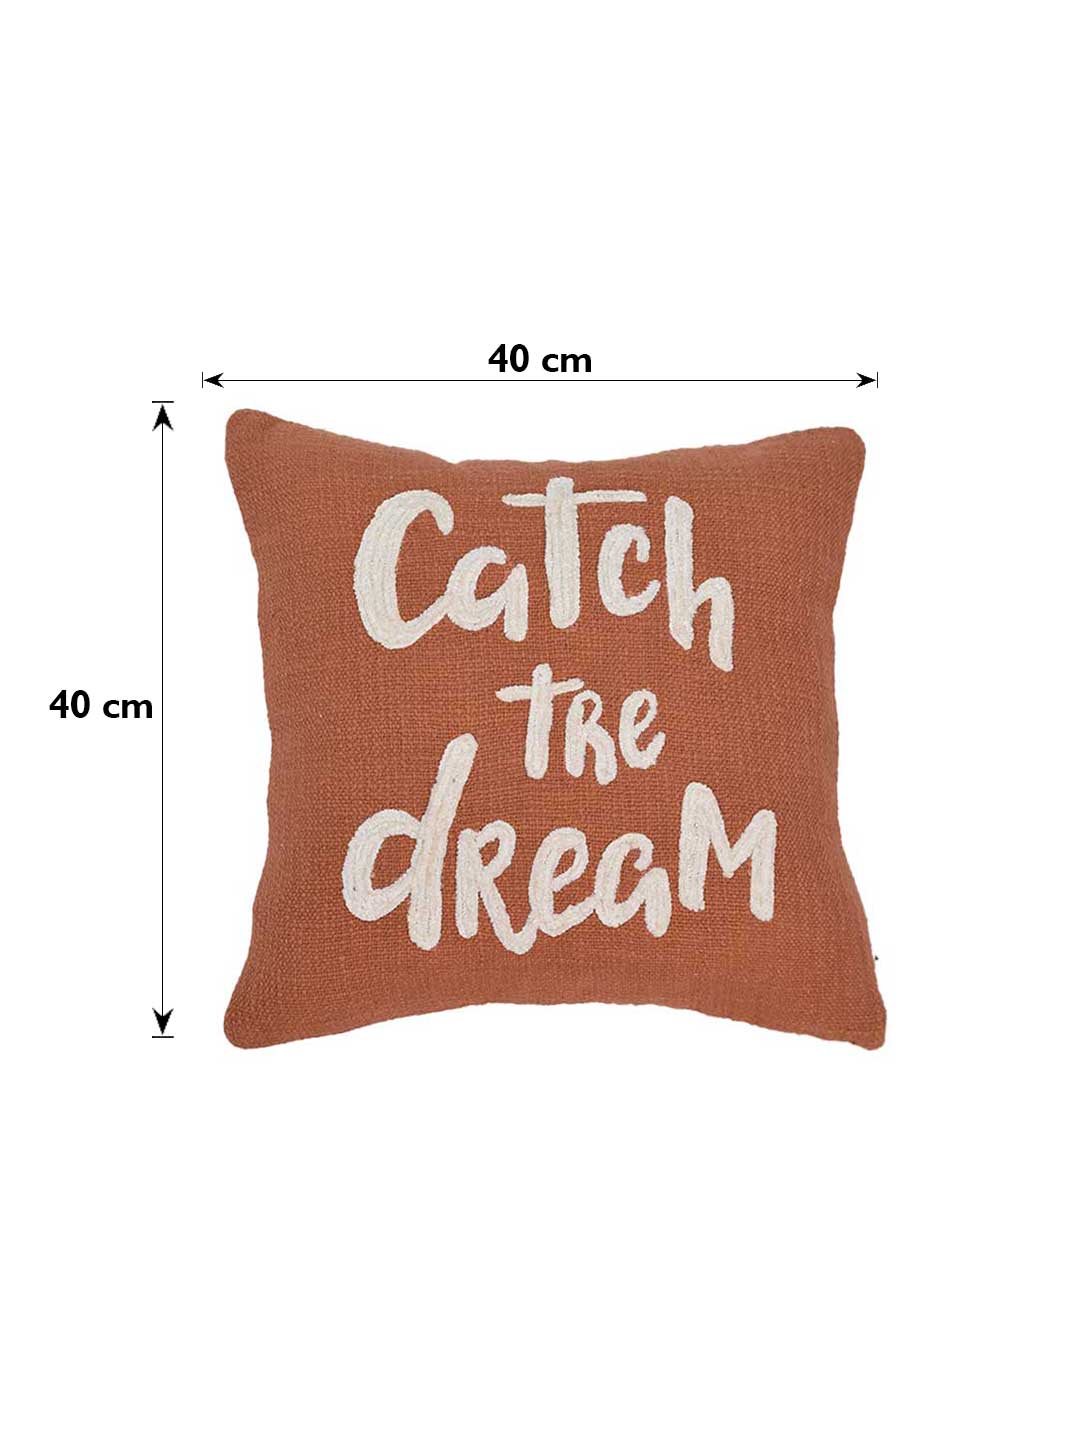 Catch the dream Cushion Cover